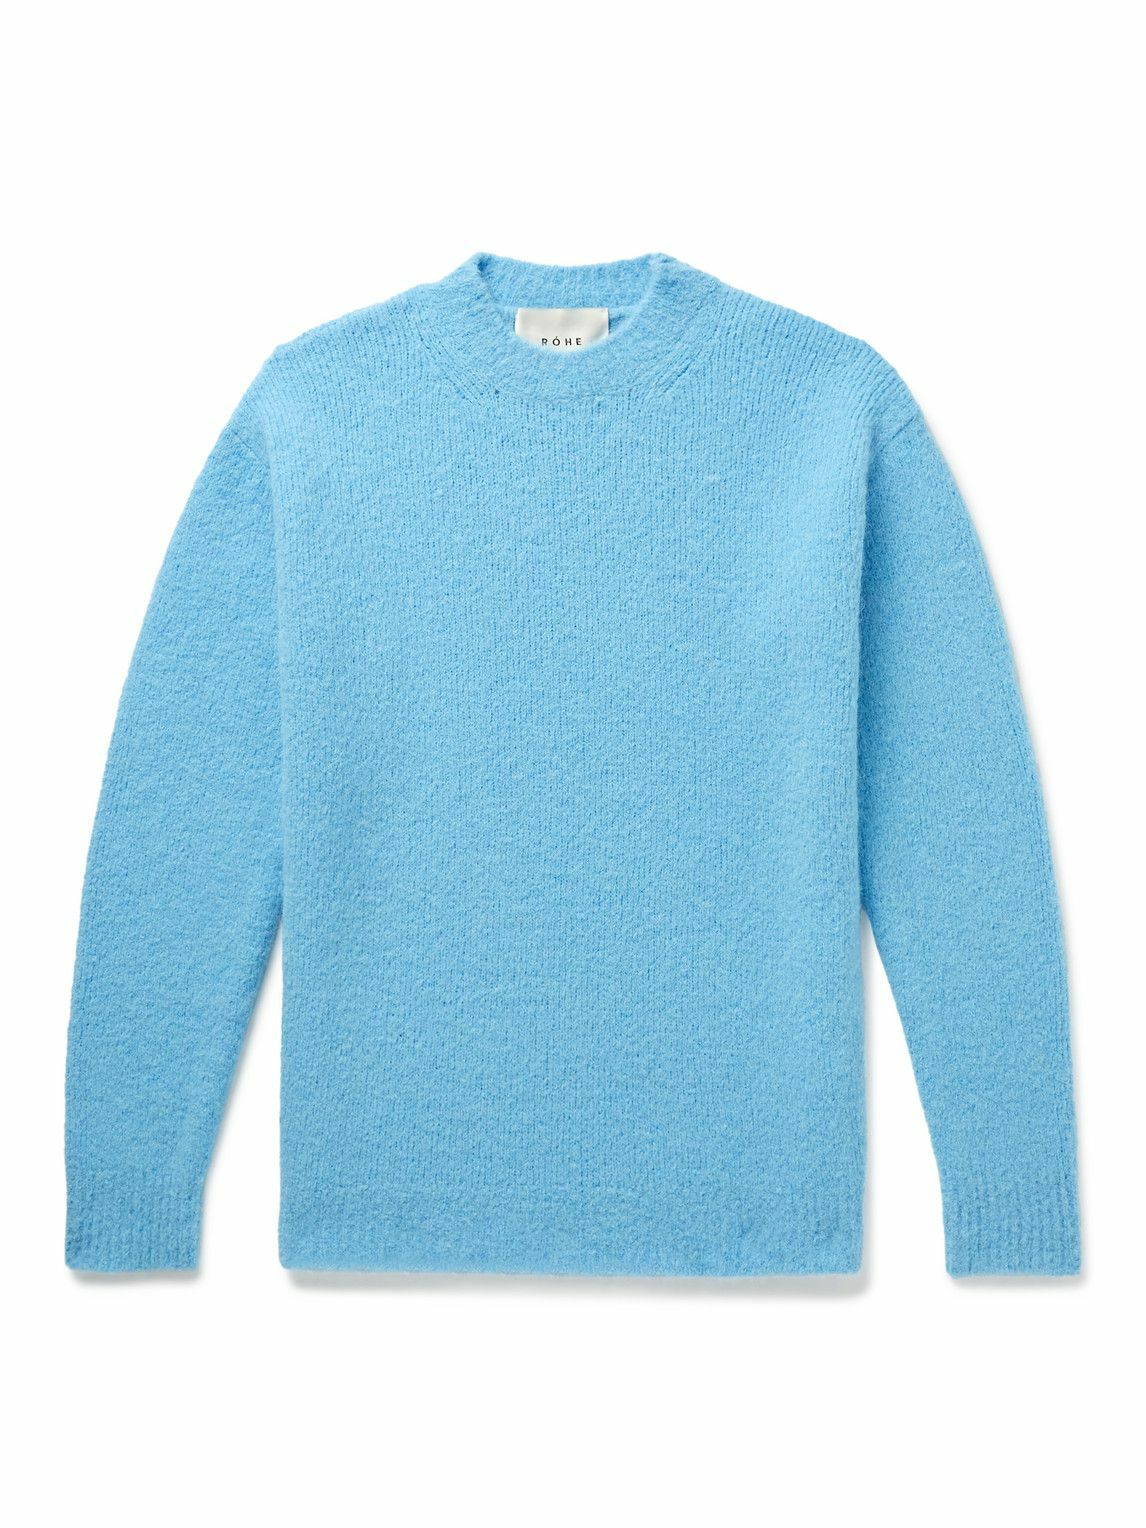 RÓHE - Alpaca-Blend Sweater - Blue